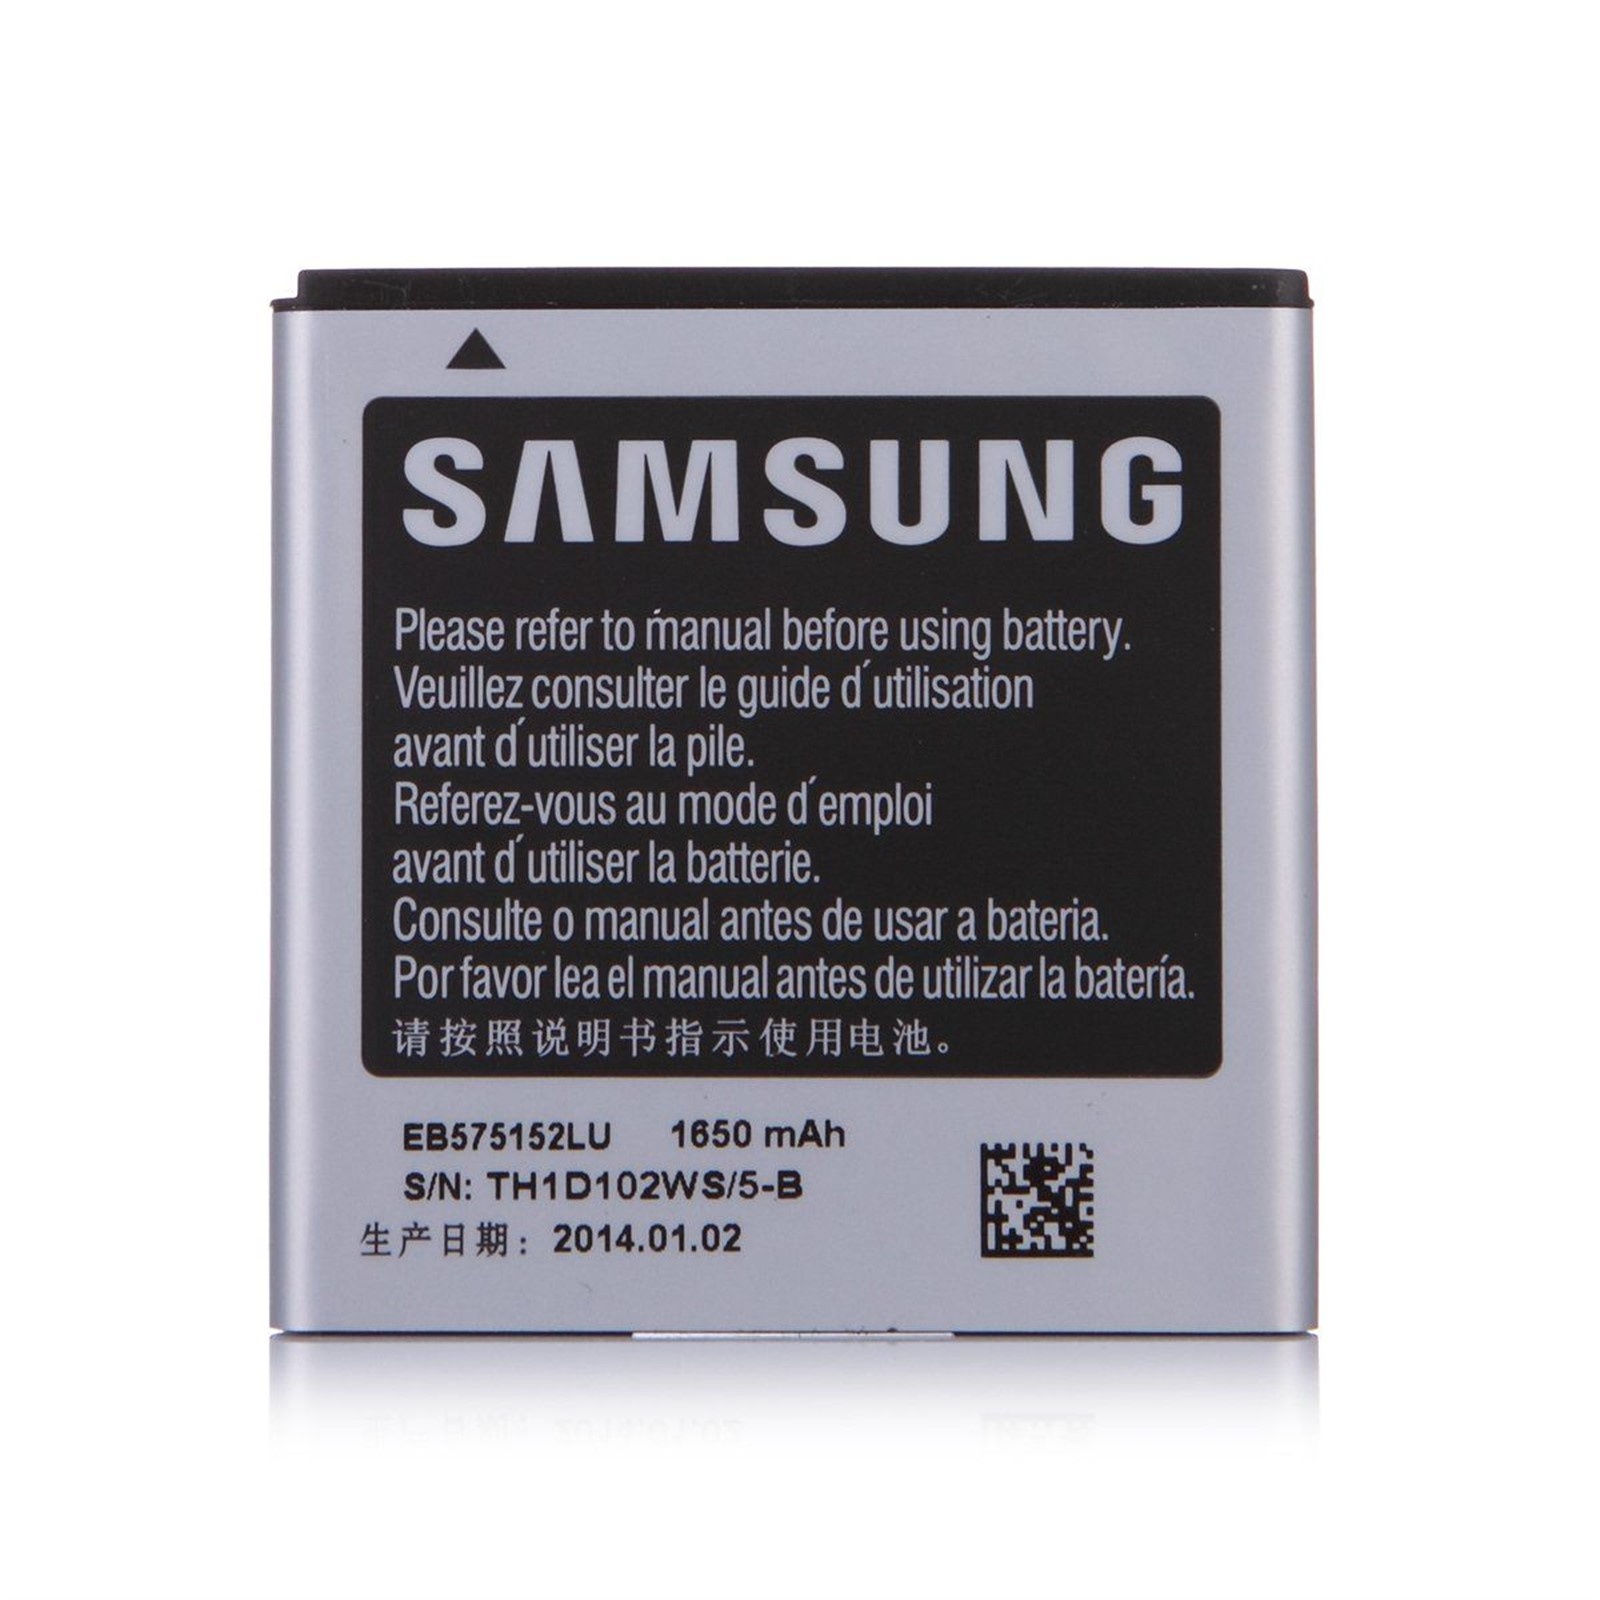 Victor suspend fragrance Cauti de ceva timp Acumulator Samsung Galaxy i9000 S I9001 S PLUS I9003 SL  B7350 Omnia EB575152LU?